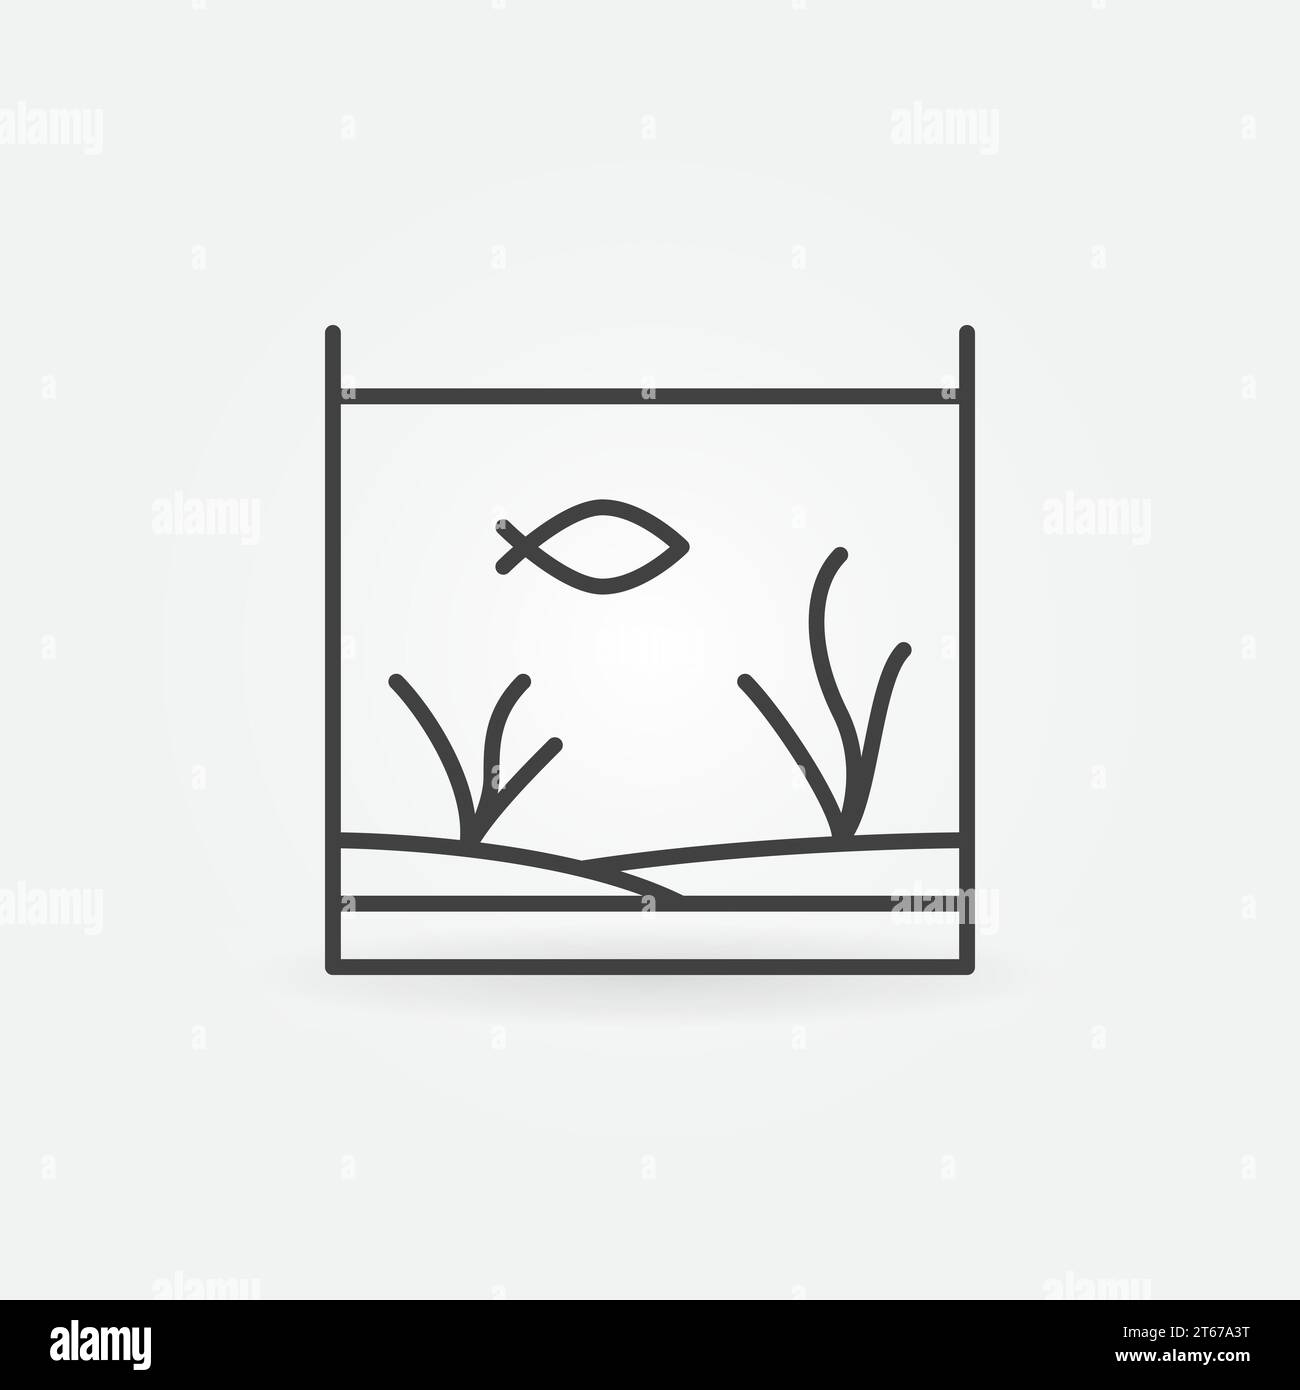 Aquarium tank sign Black and White Stock Photos & Images - Alamy